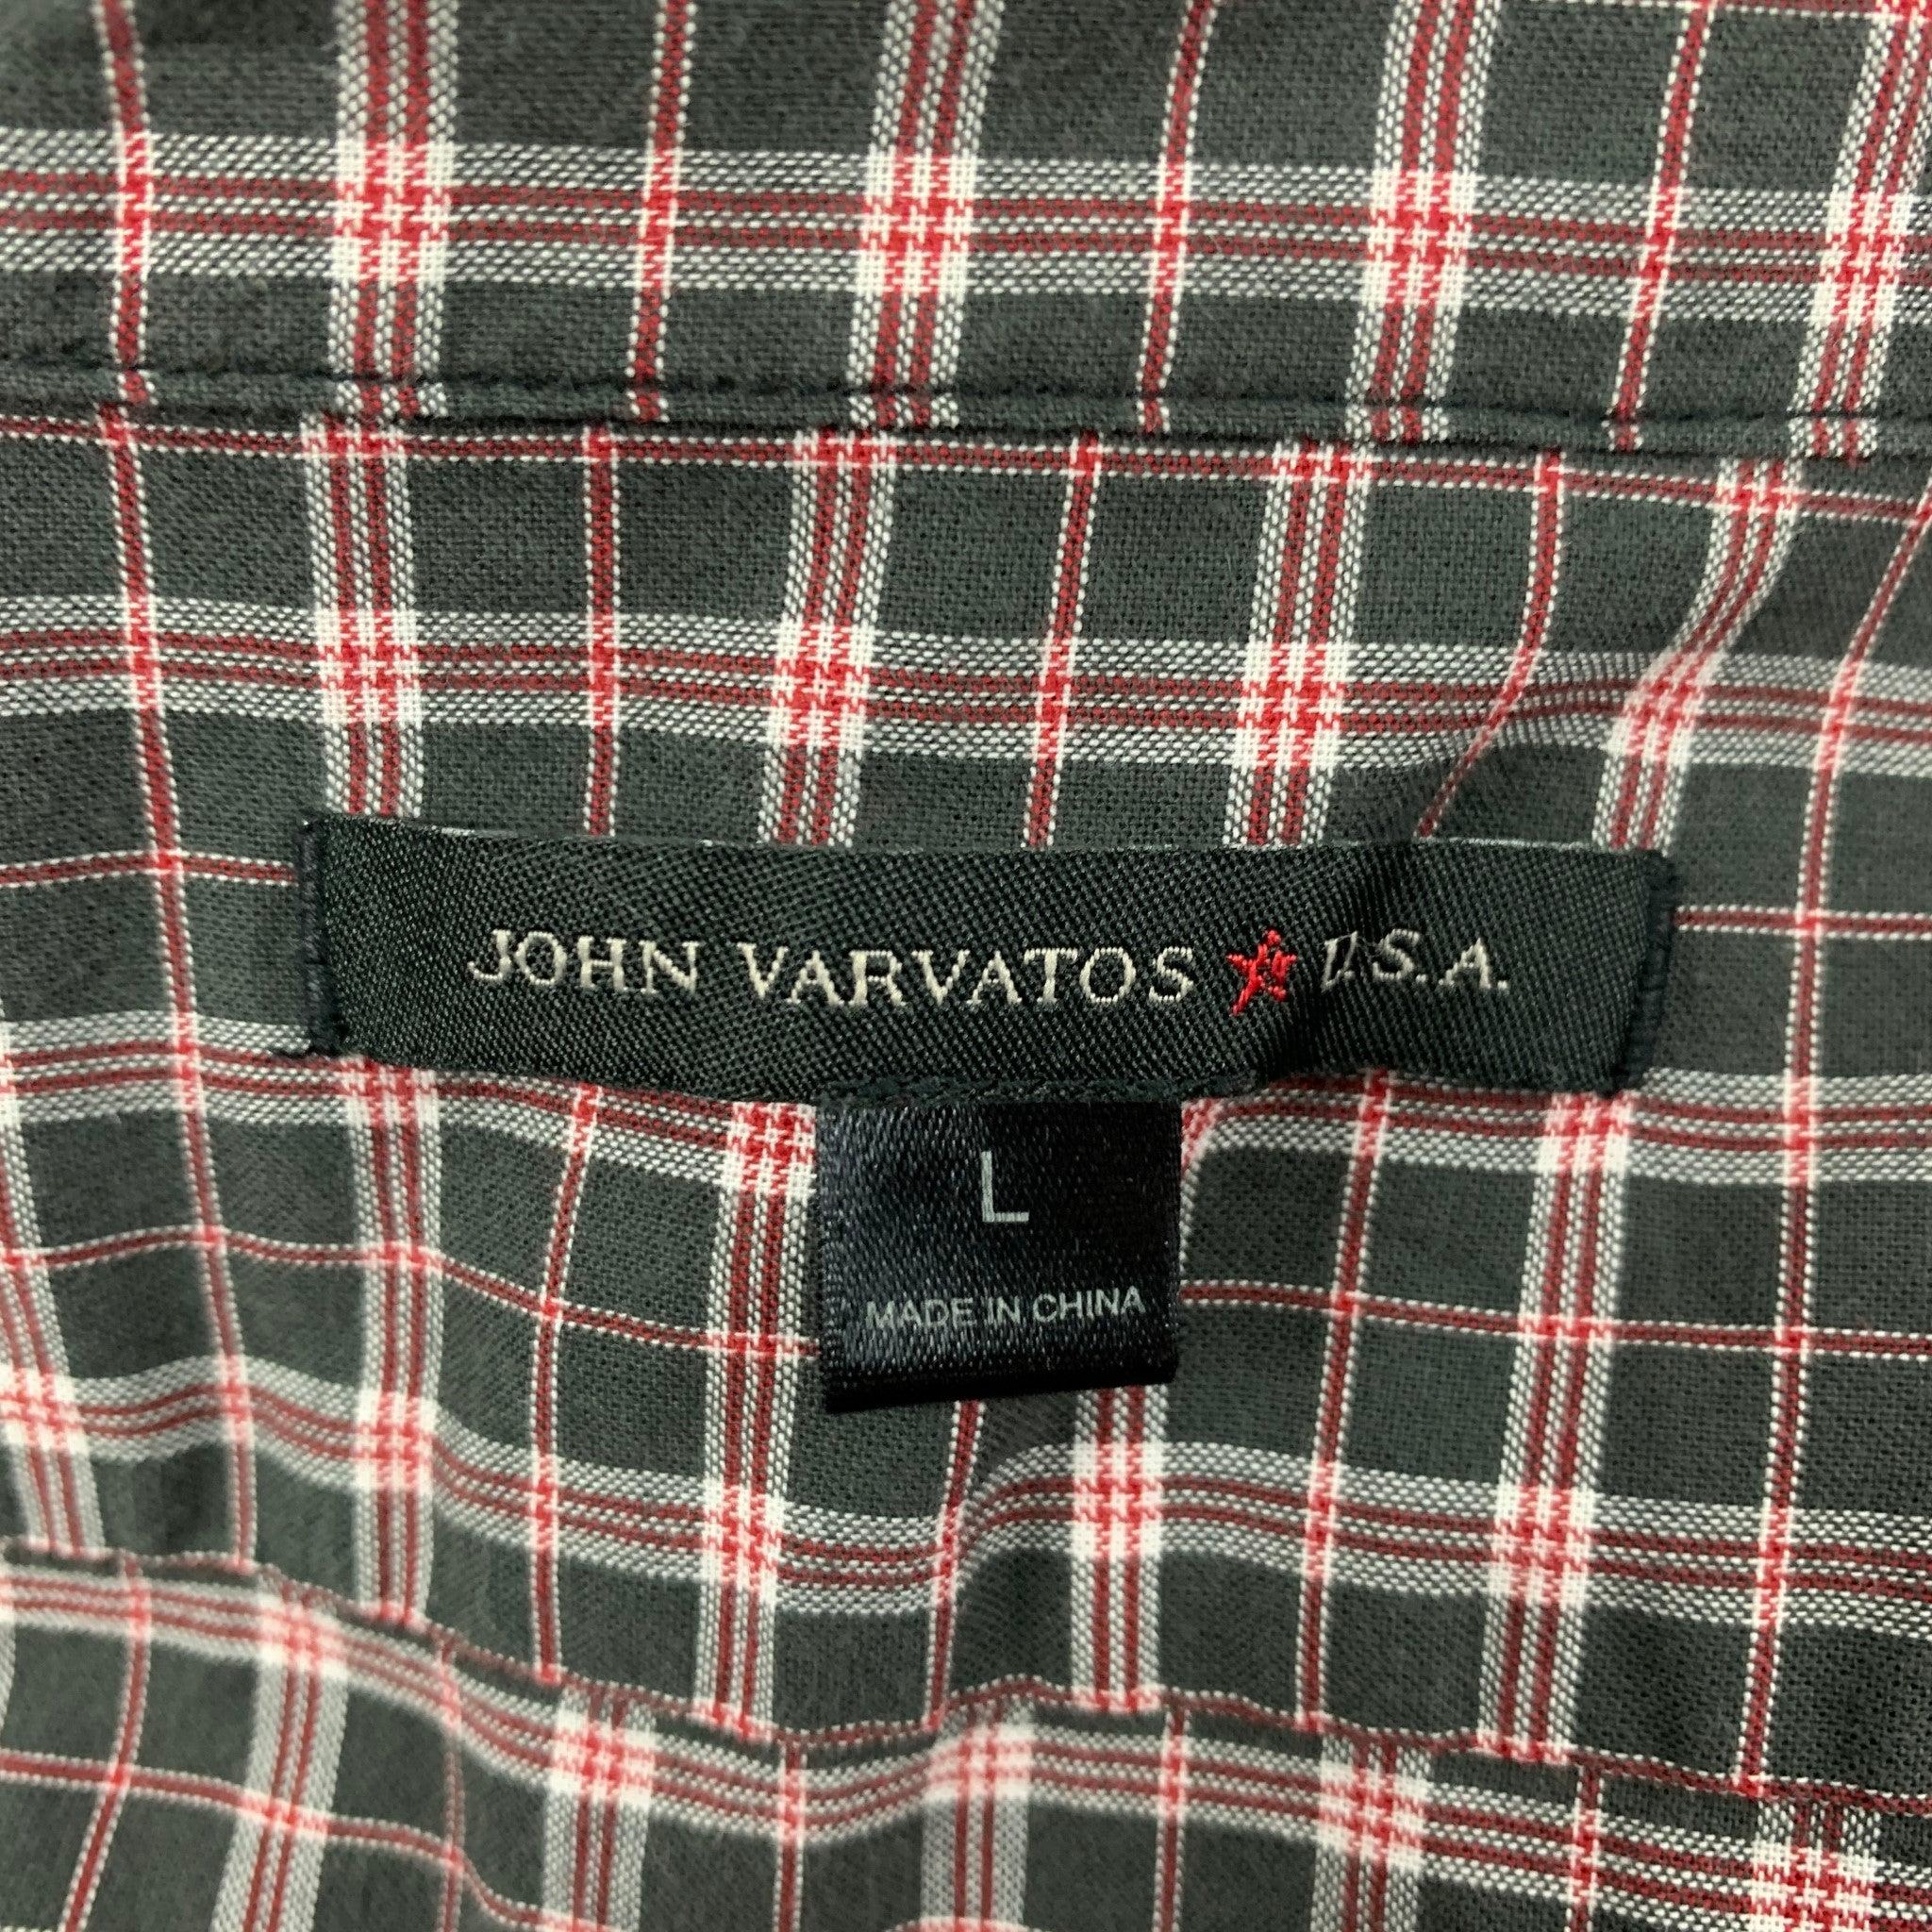 JOHN VARVATOS Size L Black Red Plaid Cotton Long Sleeve Shirt For Sale 1